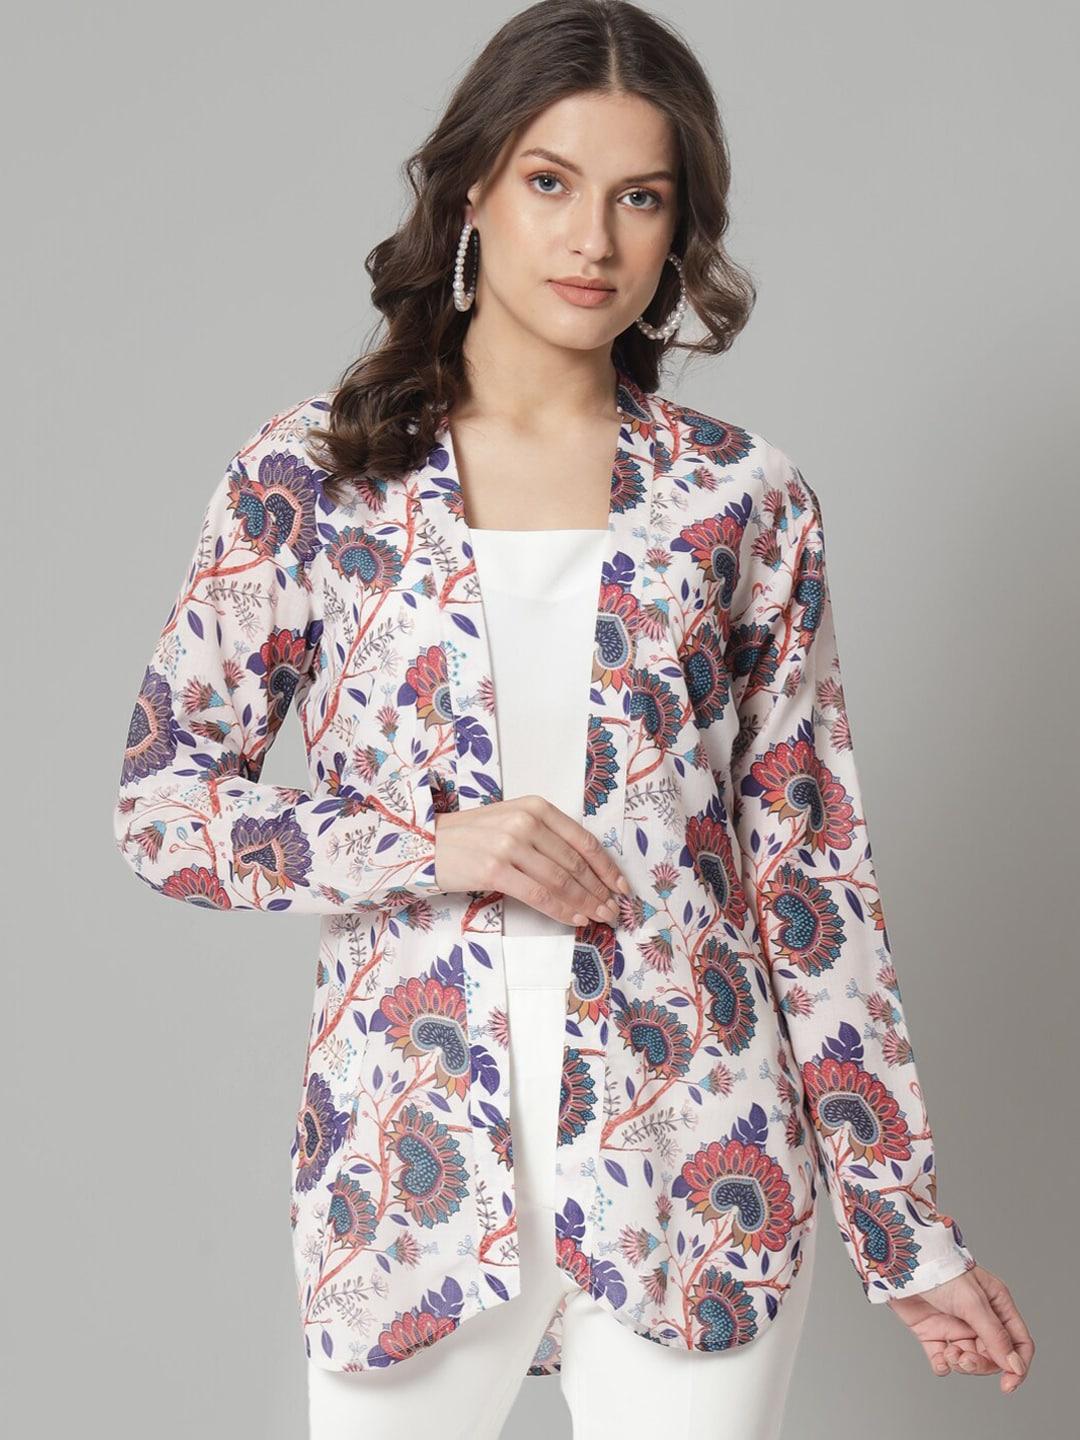 powersutra-floral-lightweight-cotton-open-front-jacket